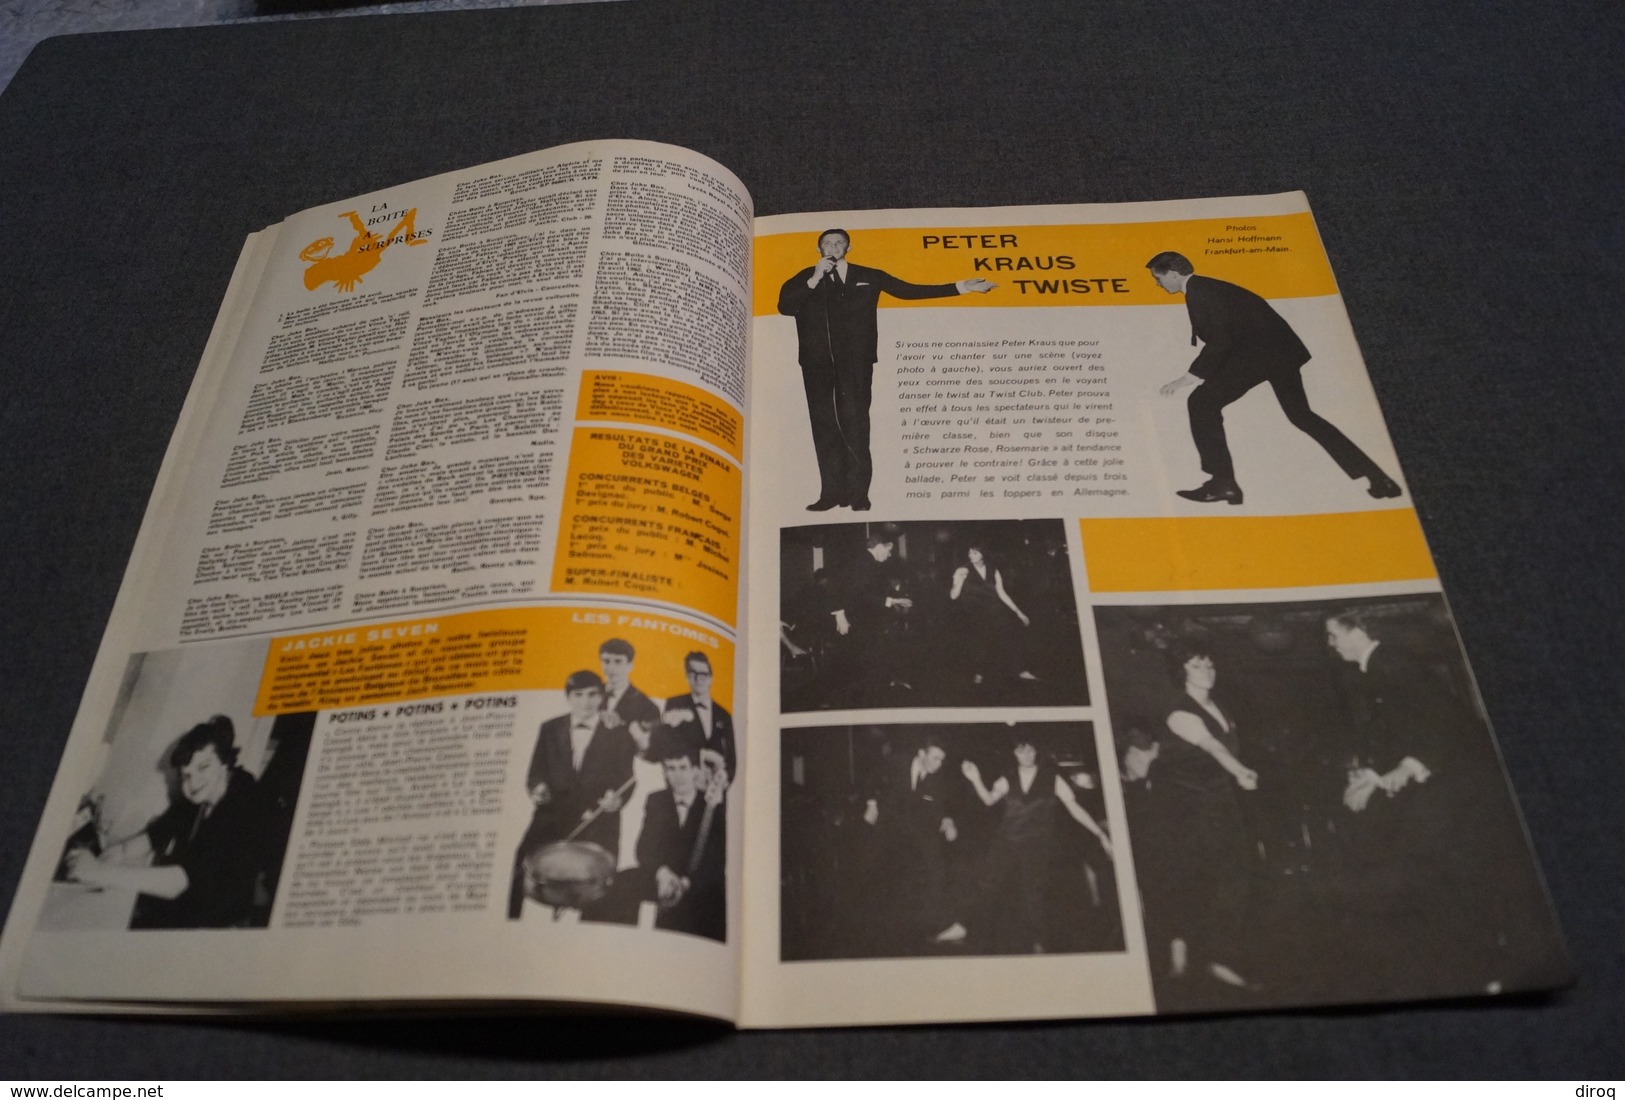 Juke Box ,revue Vintage 1962 ,Elvis Presley,Bourvil,Johnny Halliday,etc...complet - Music